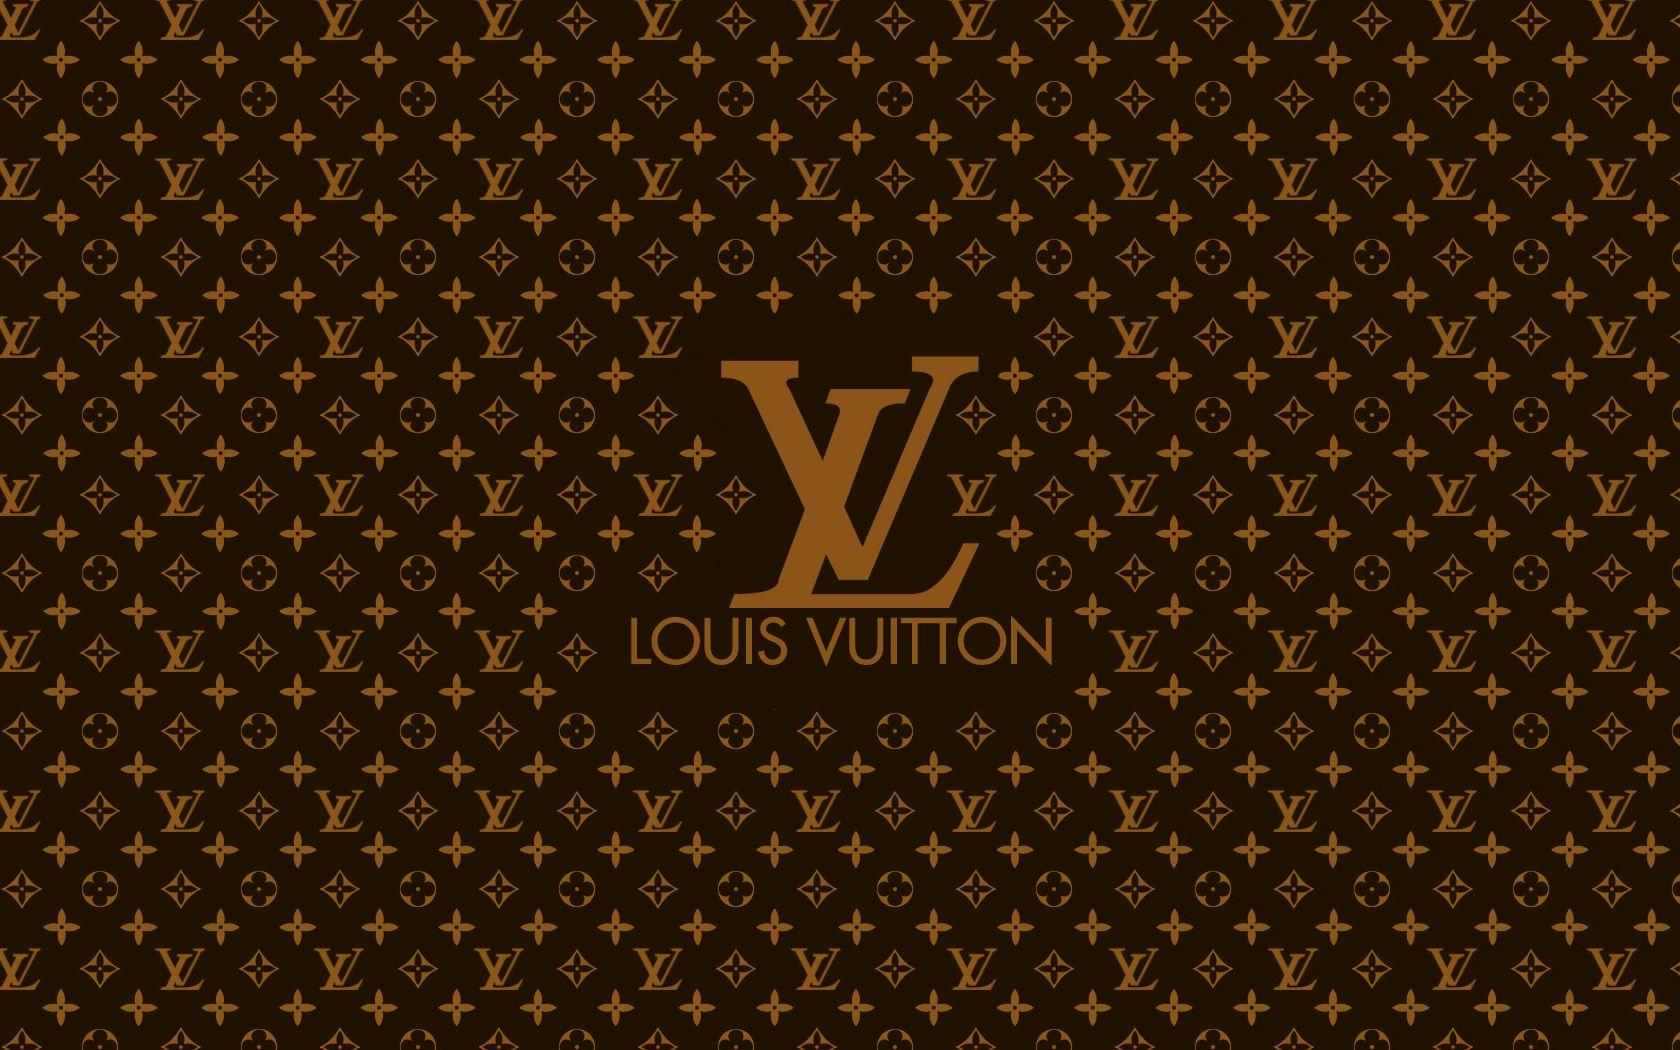 1680x1050 Hình nền Louis Vuitton 16080 1680x1050 px